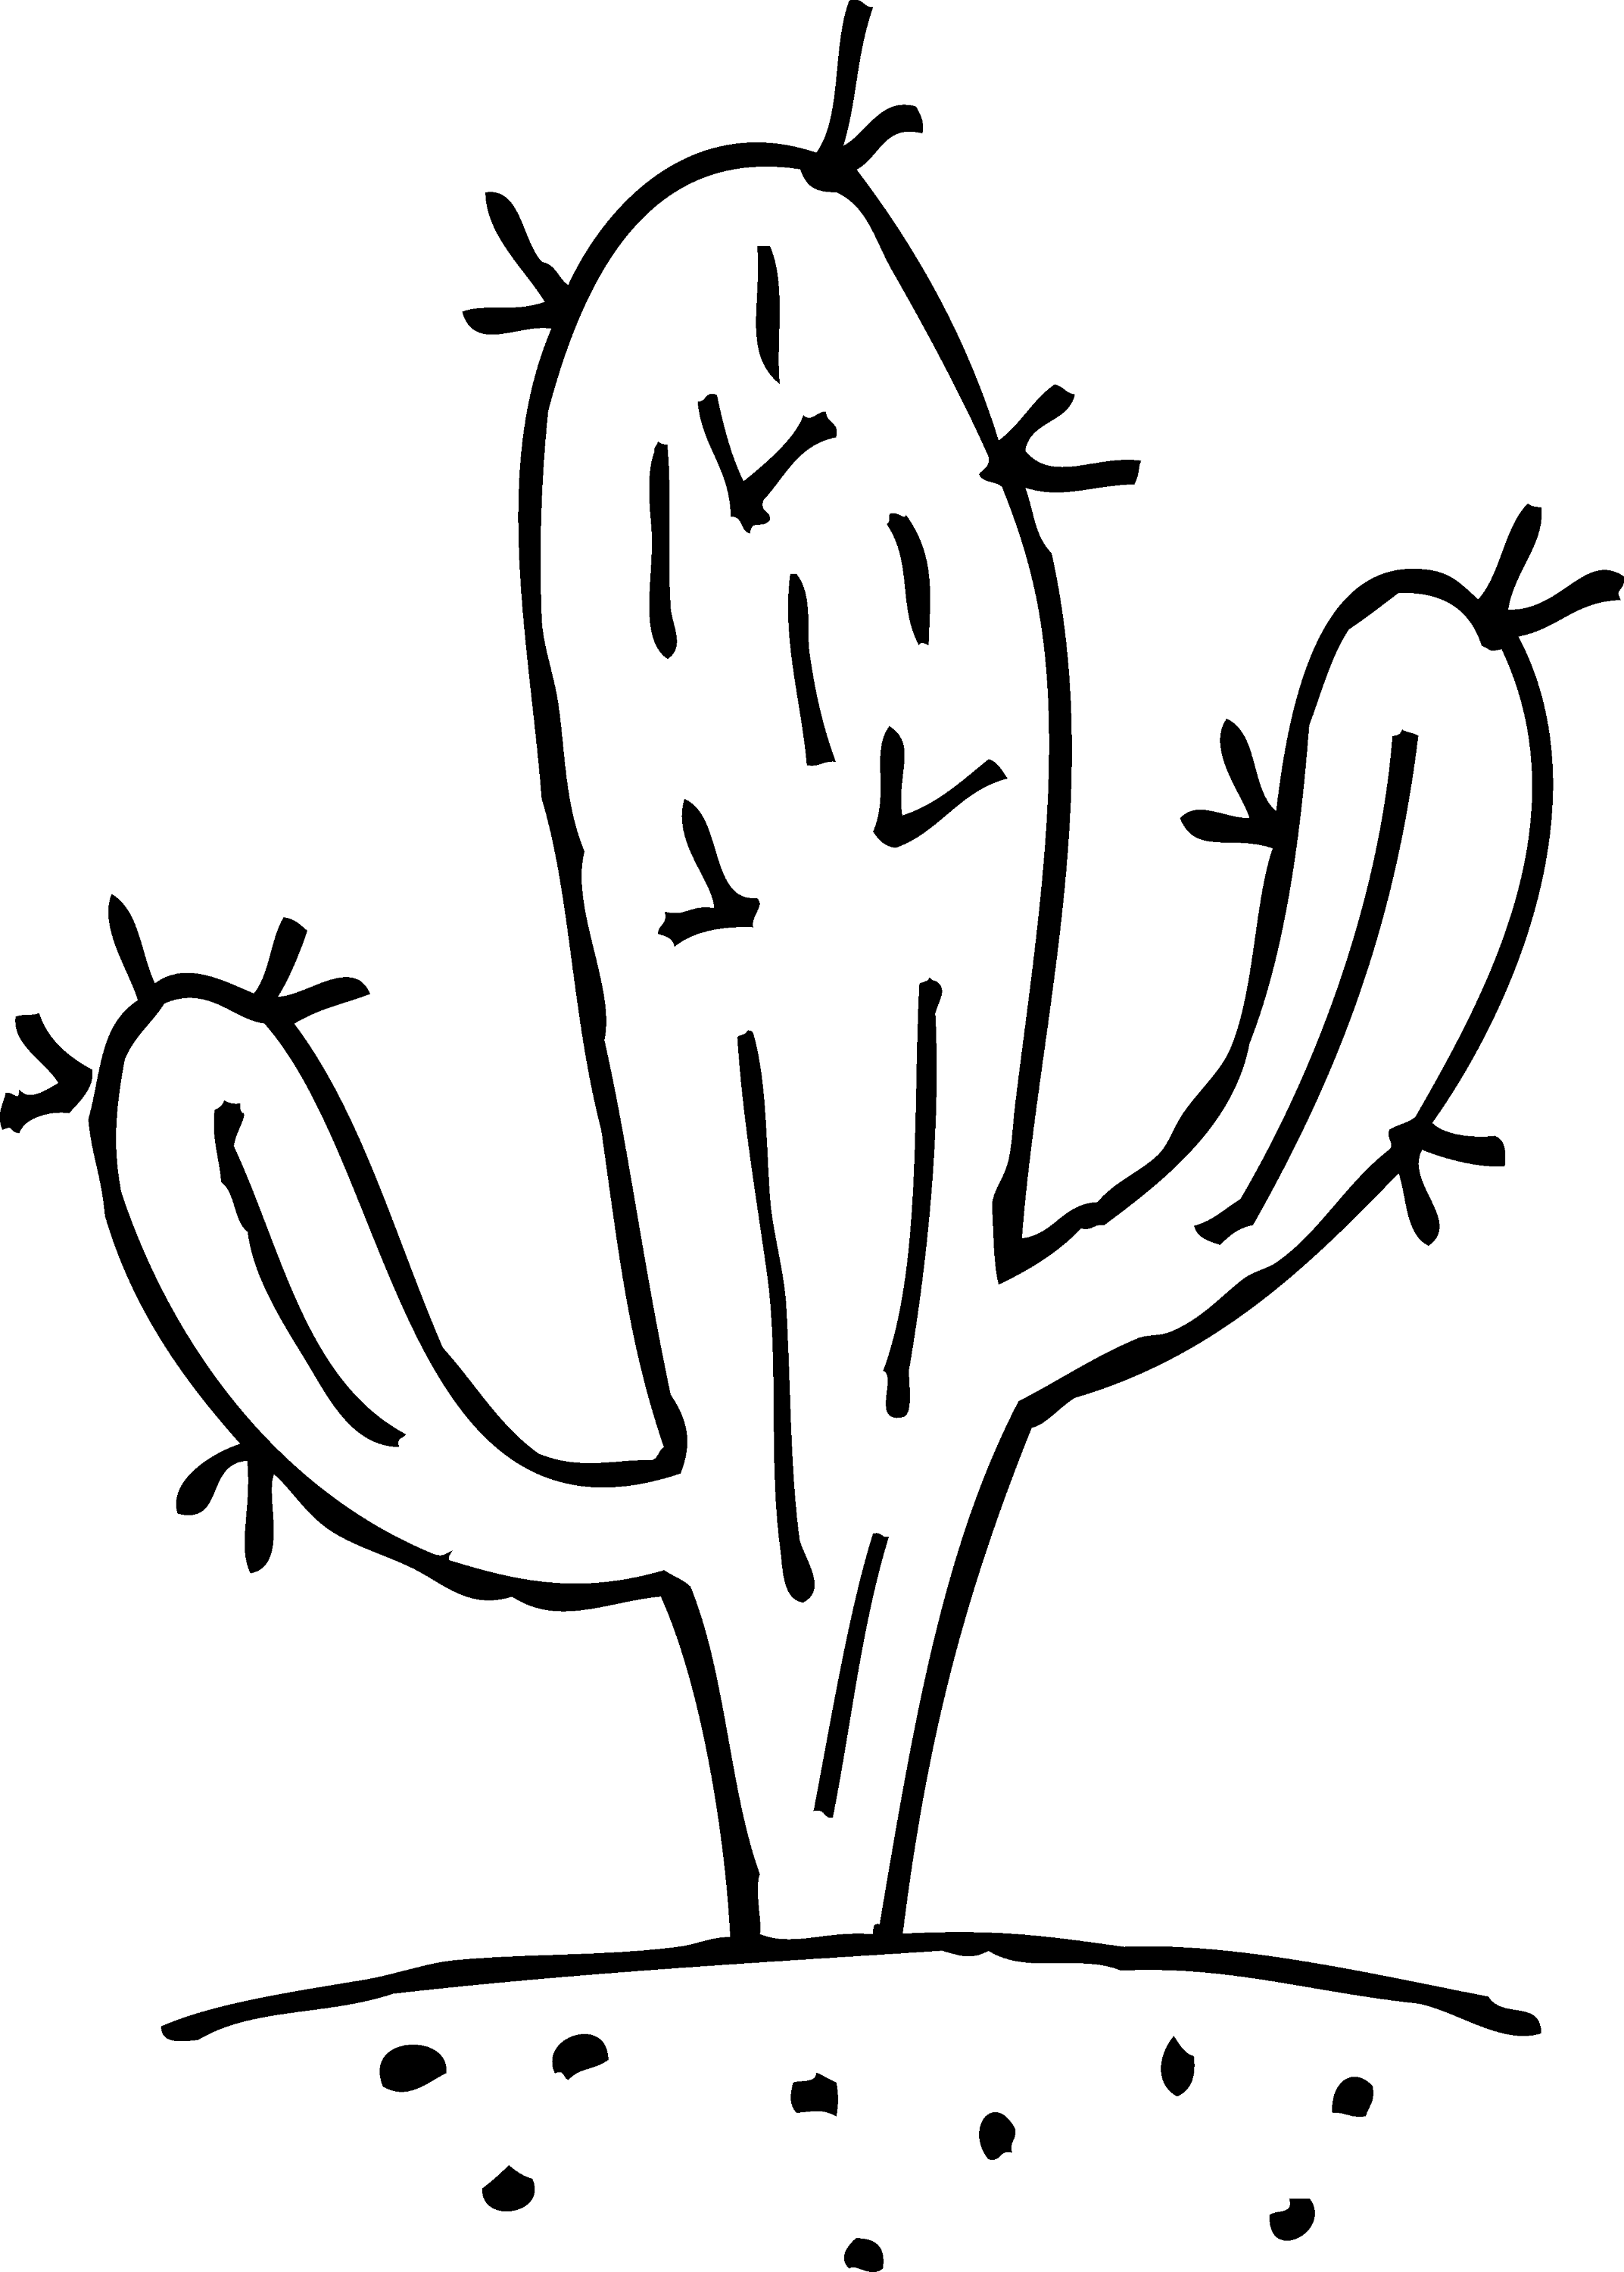 Prickly Cactus Coloring Page - Free Clip Art